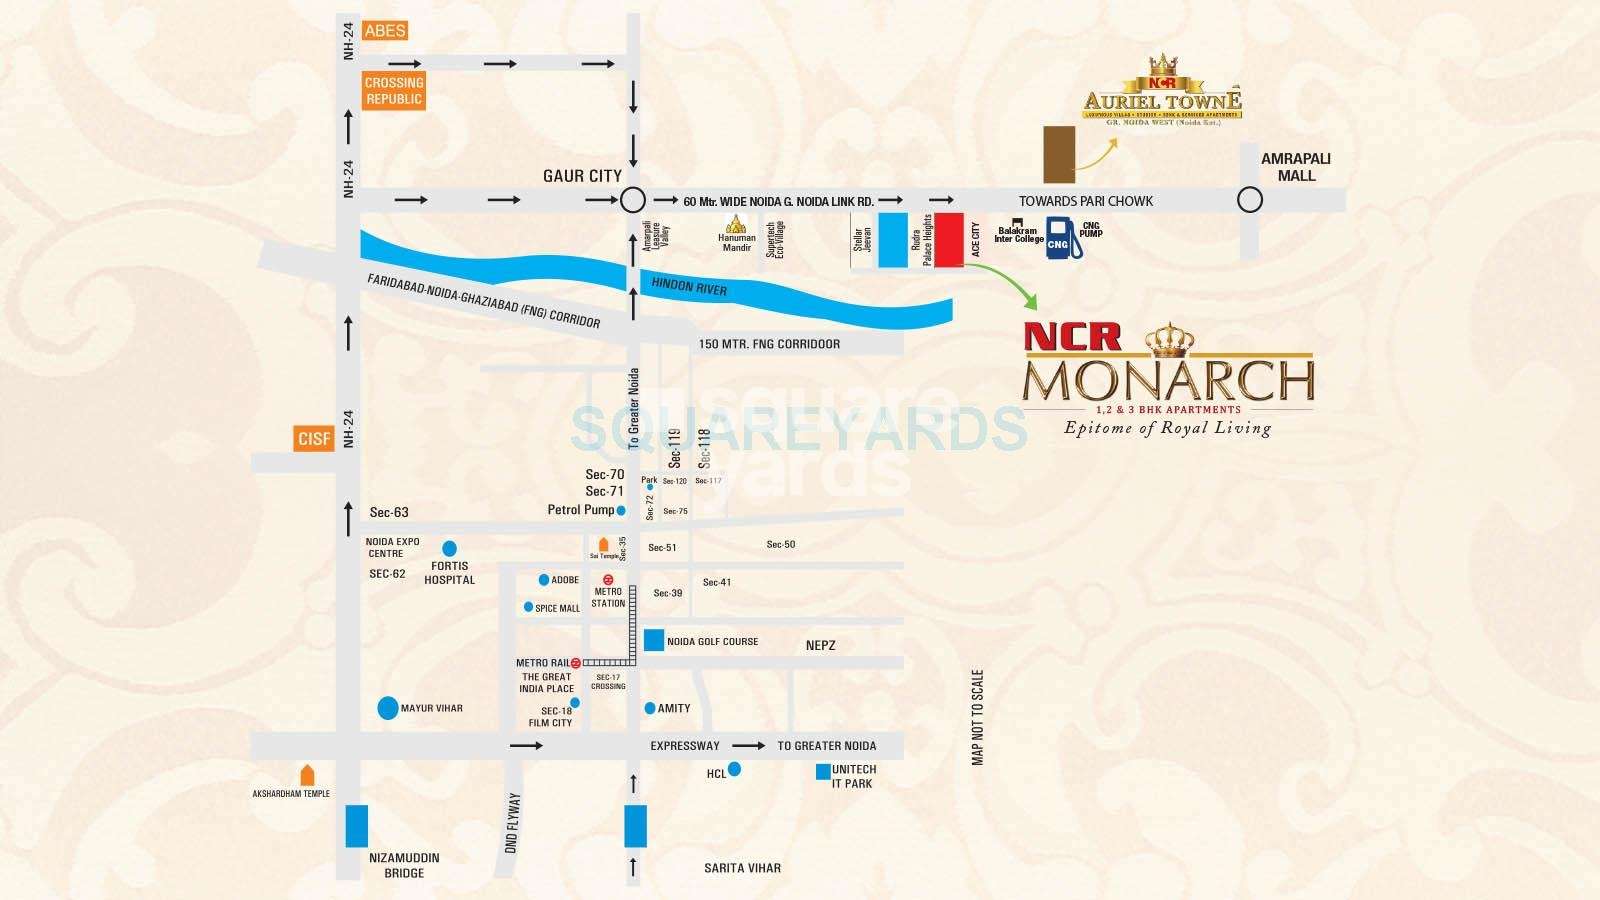 ncr monarch location image1